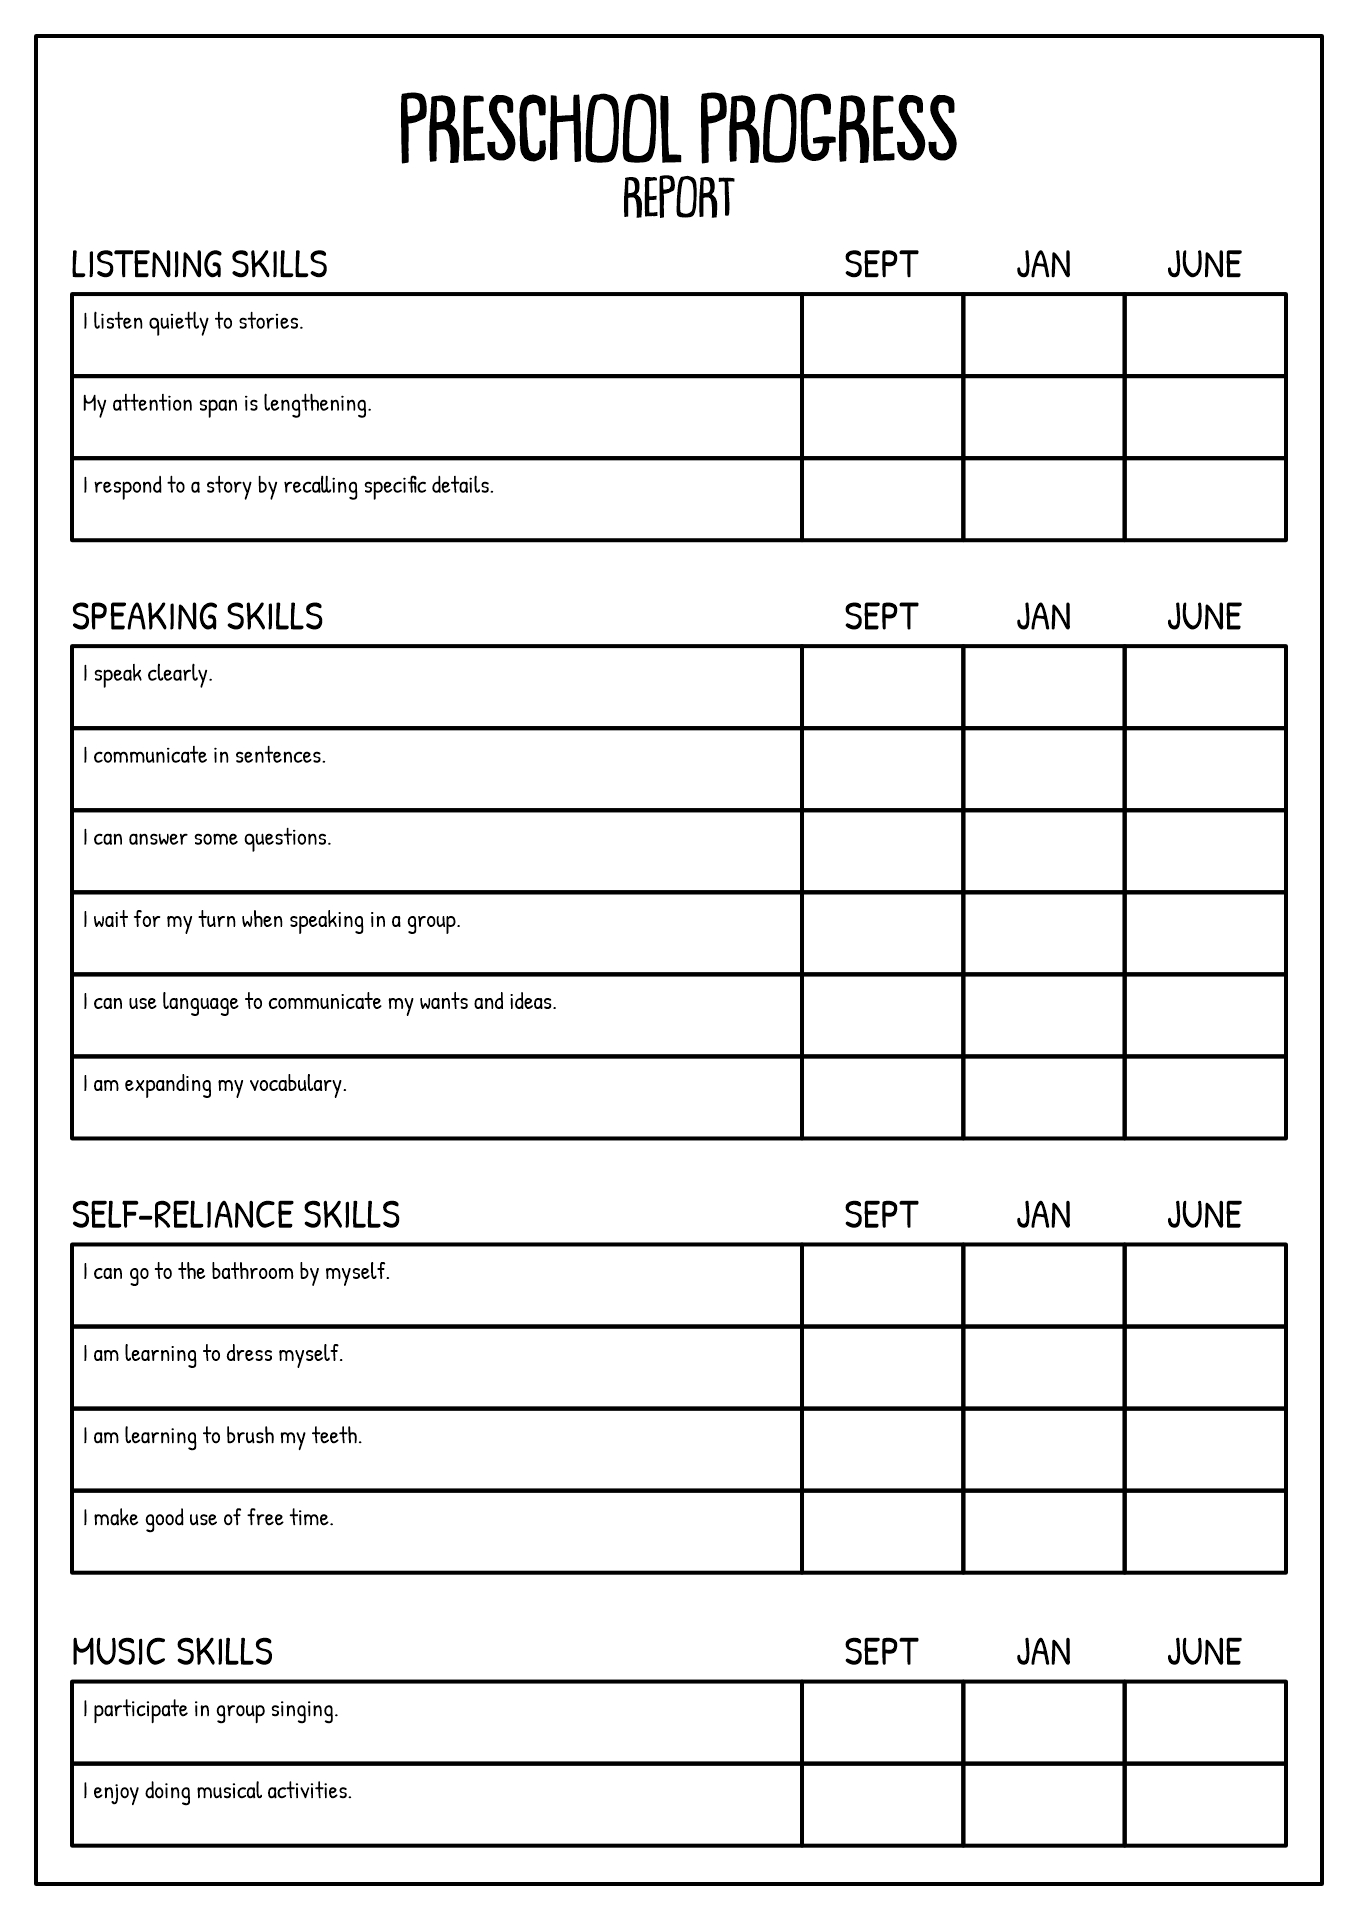 Free Printable Progress Reports For Preschool